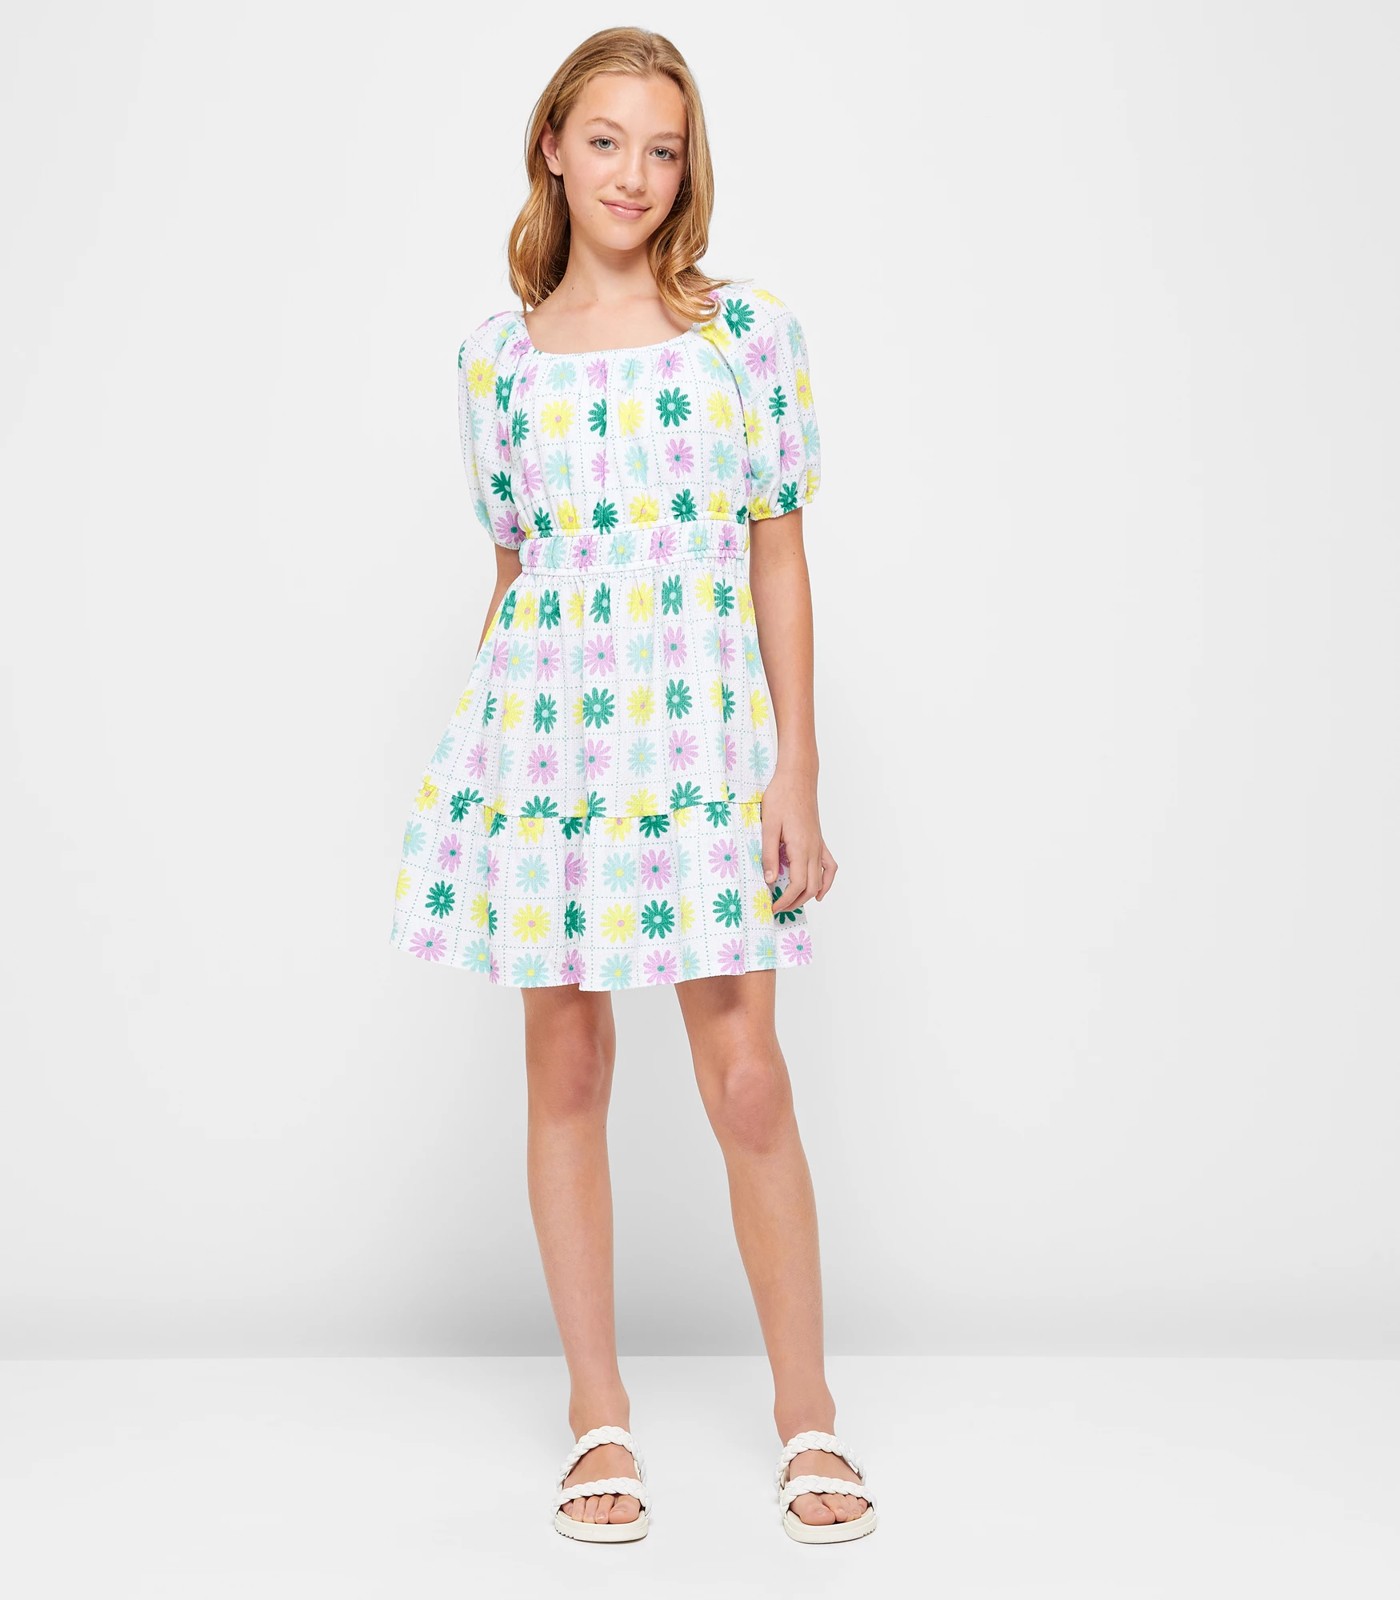 Textured Floral Dress | Target Australia